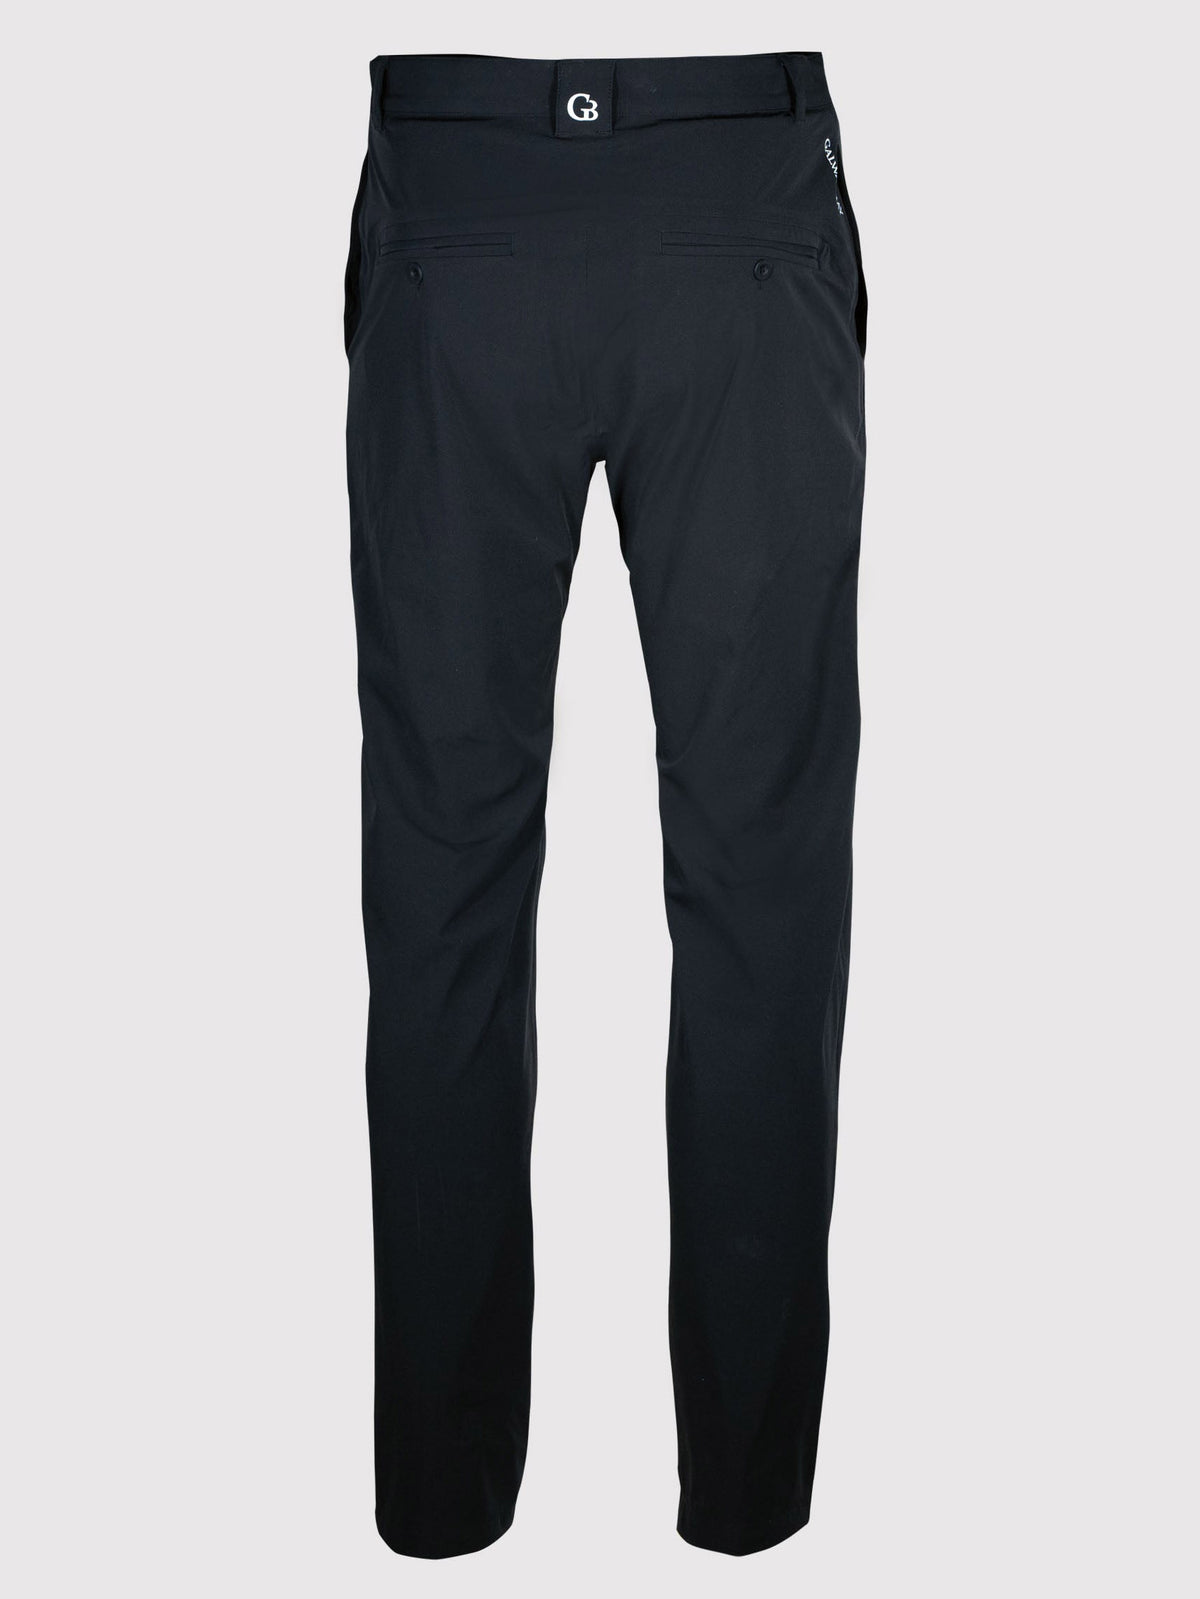 Lined Golf Rain Pants | Lined Golf Pants | Galway Bay Apparel, LLC